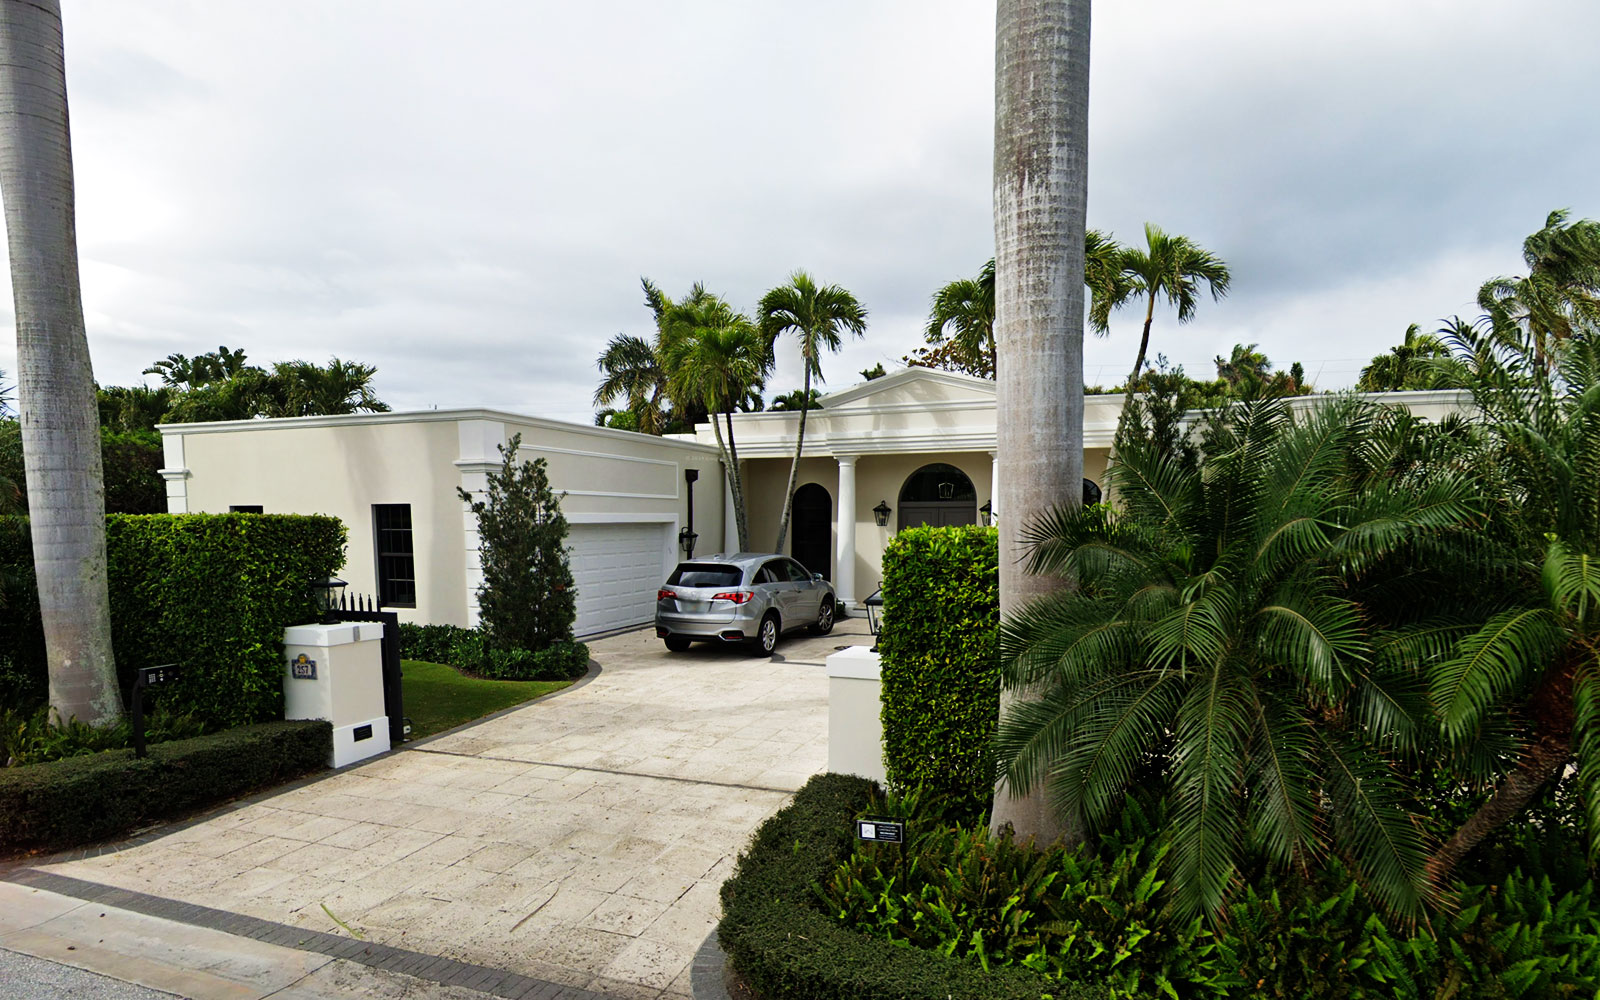 Resi Roundup: Tech CEO, Financiers Buy South Florida Homes